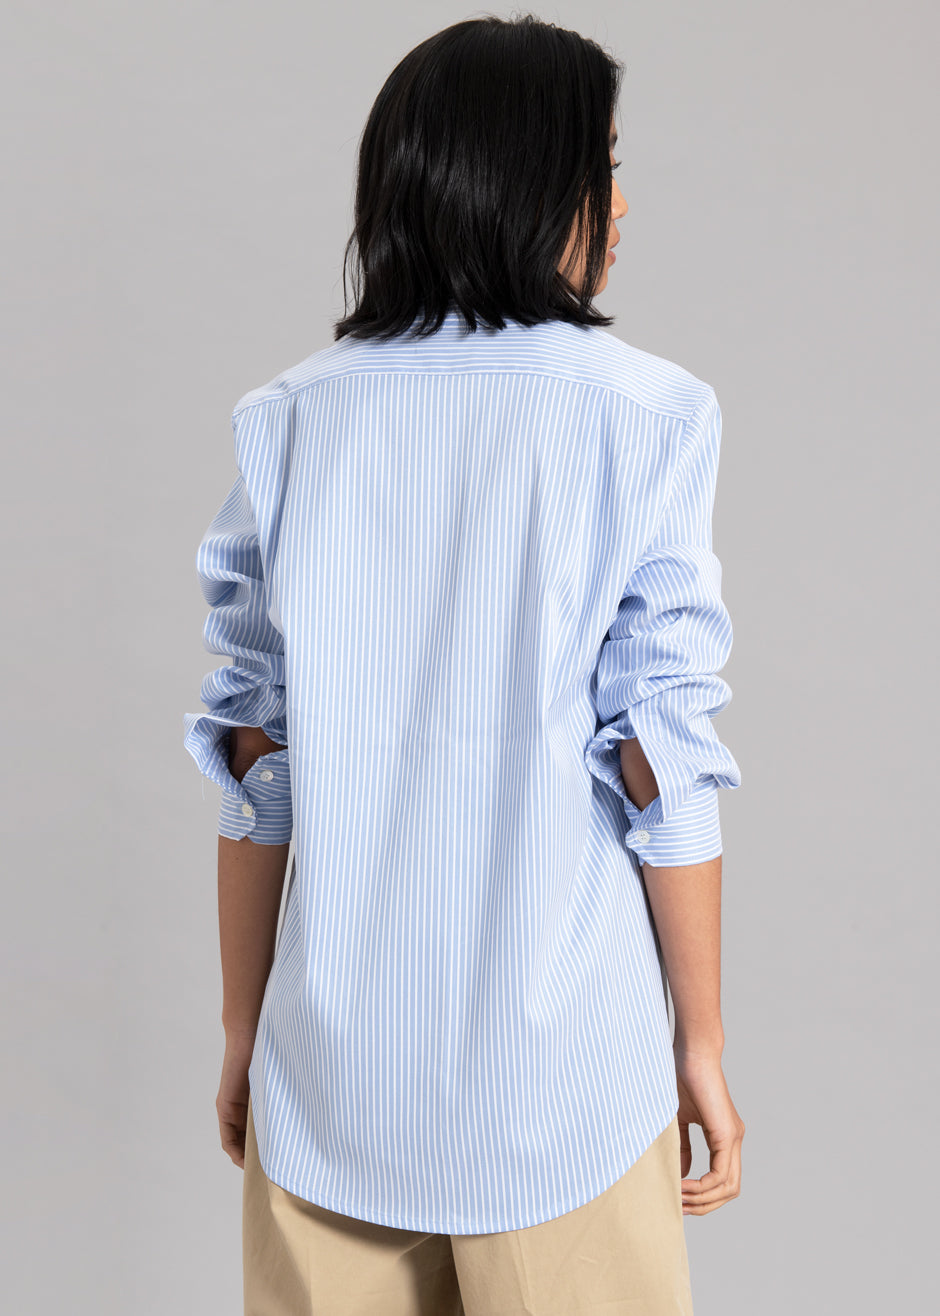 Mina Shirt - Blue Stripe - 10